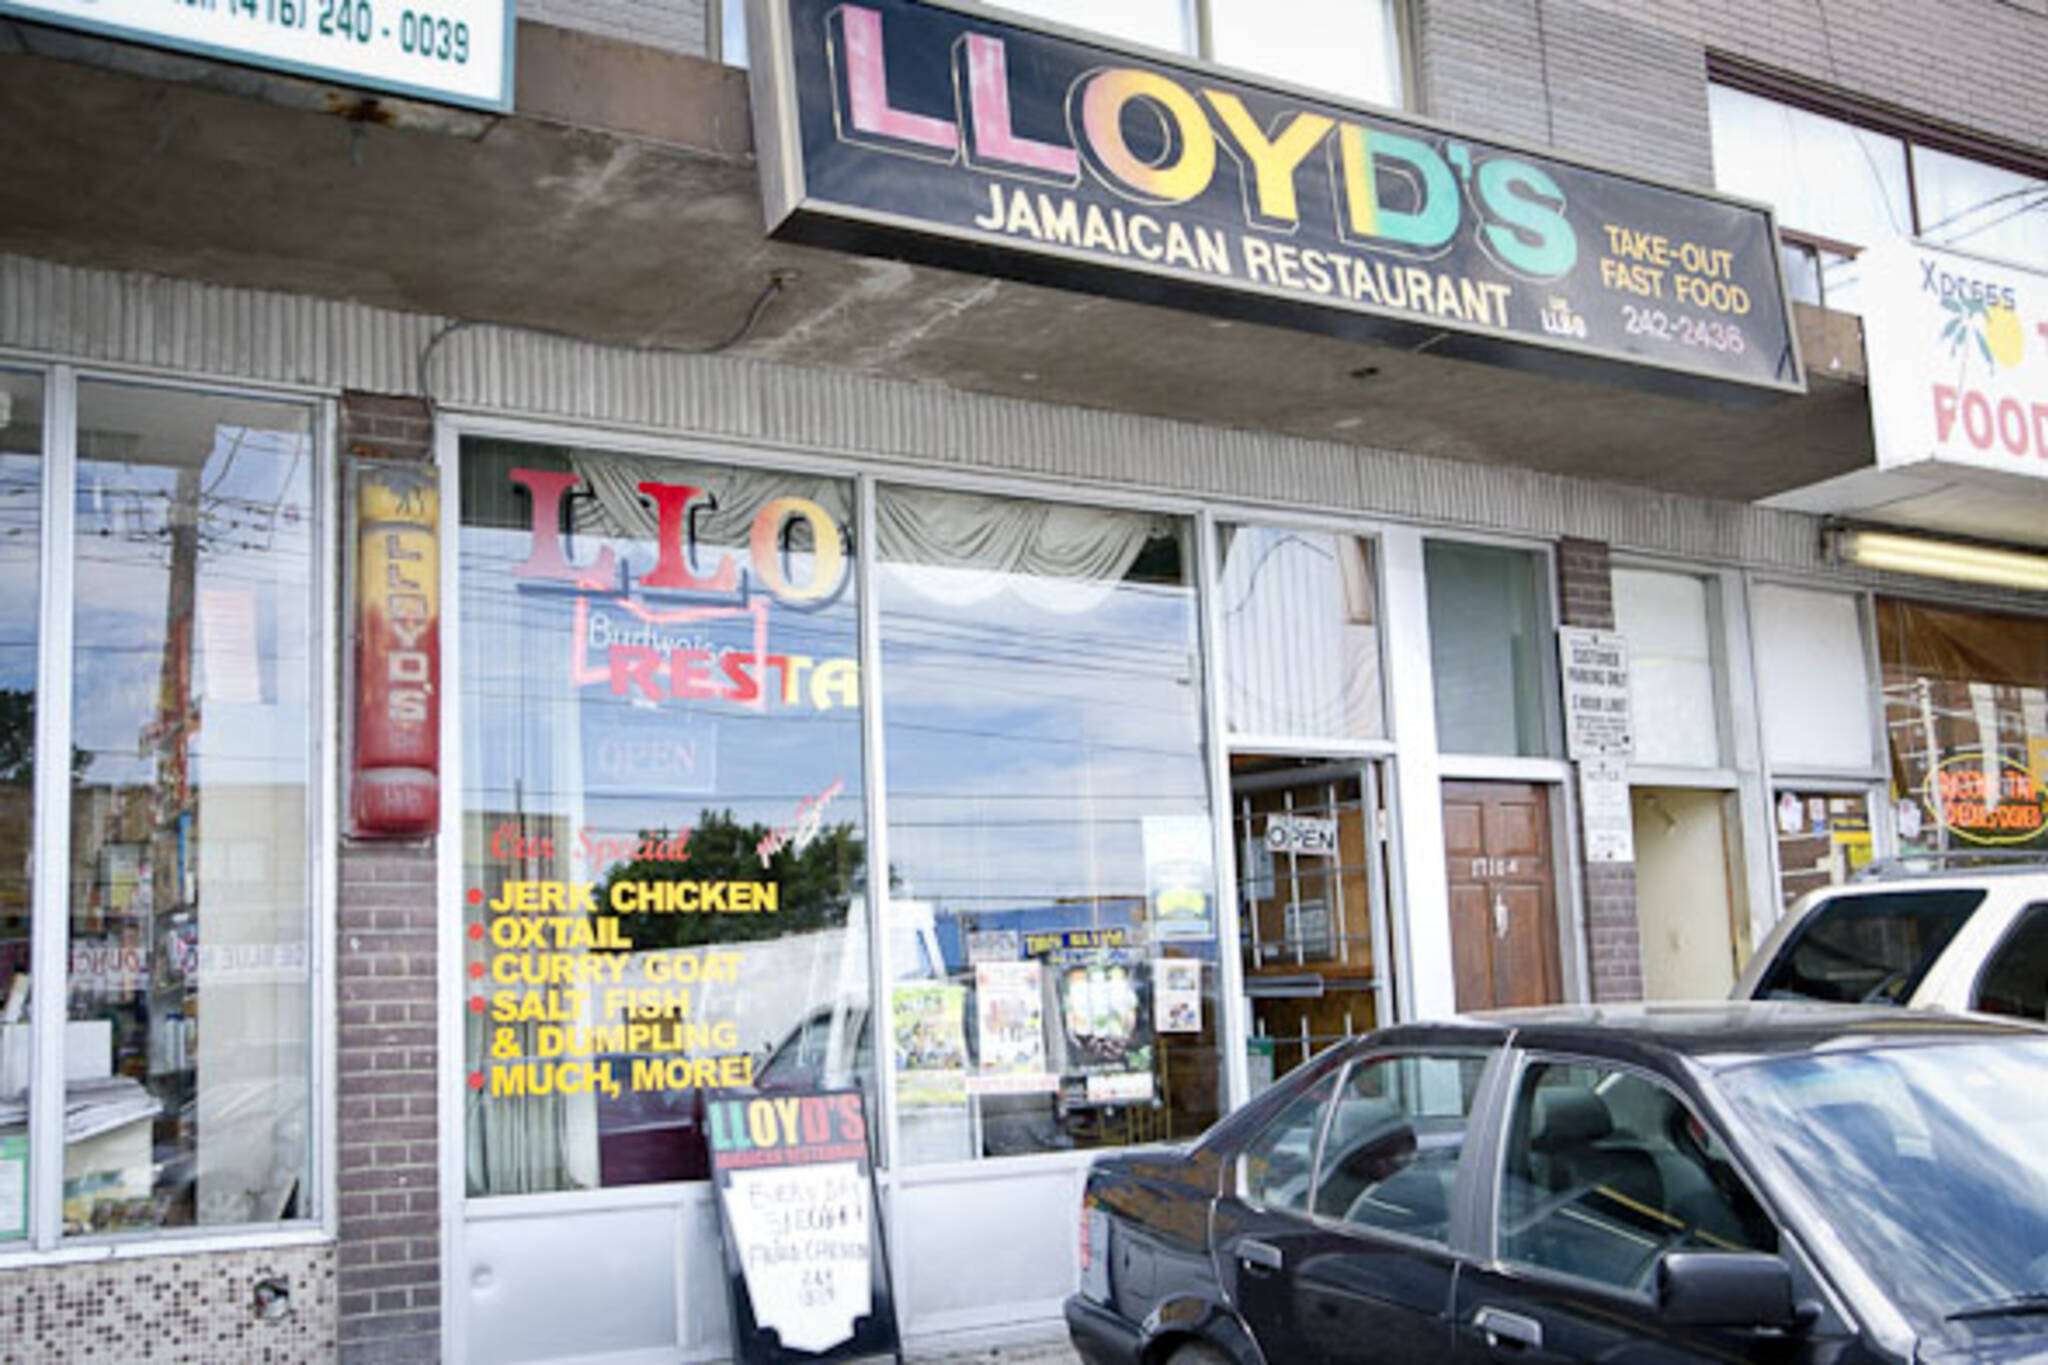 Lloyds Jamaican Restaurant